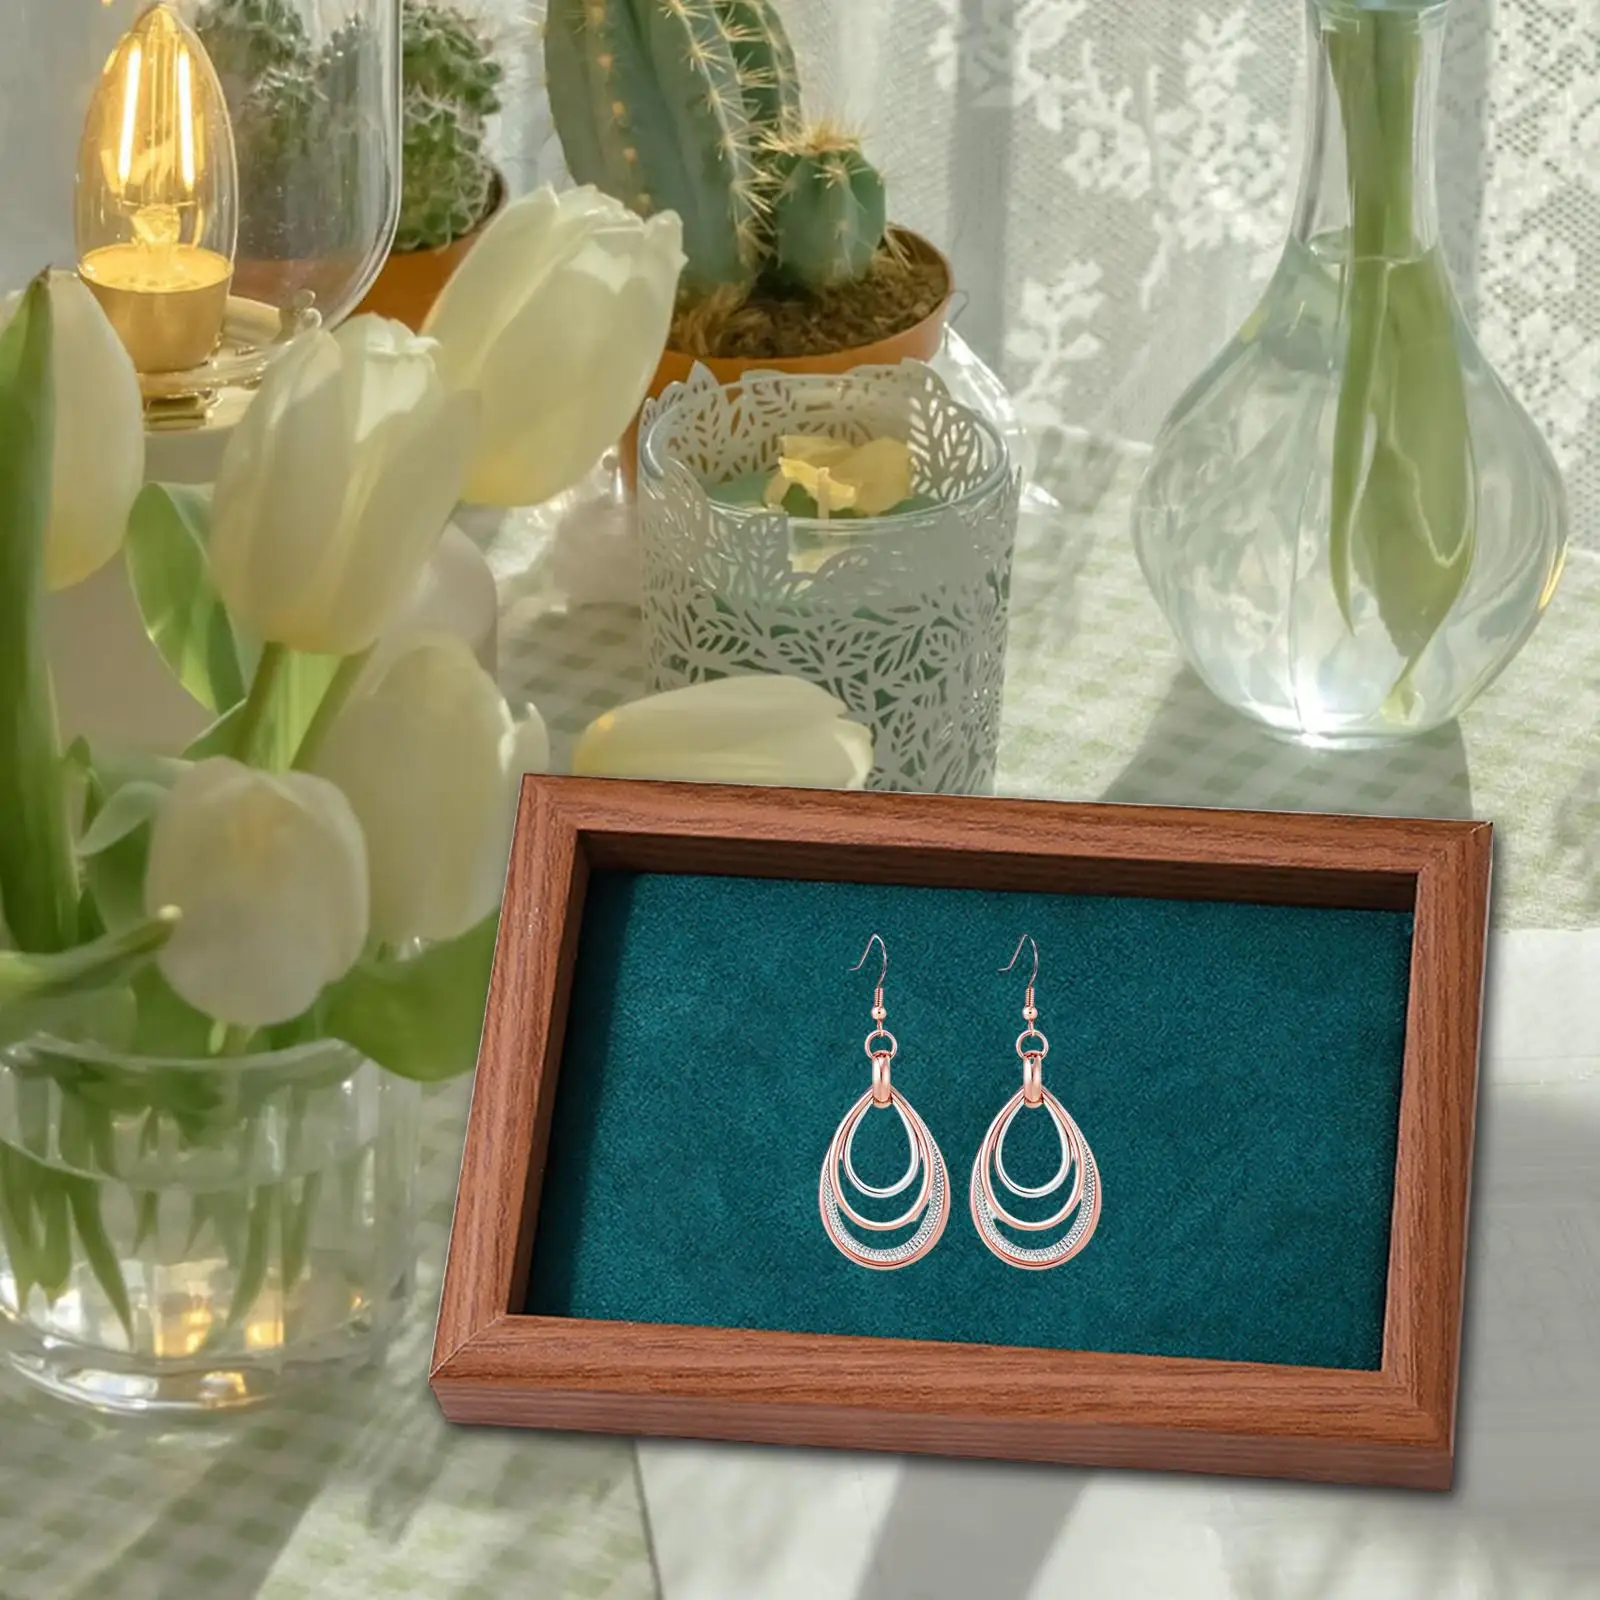 Jewelry Tray Organizer Wood Multifunctional Gift Jewelry Storage Display Tray for Earring Necklace Pendants Bracelet Women Girls